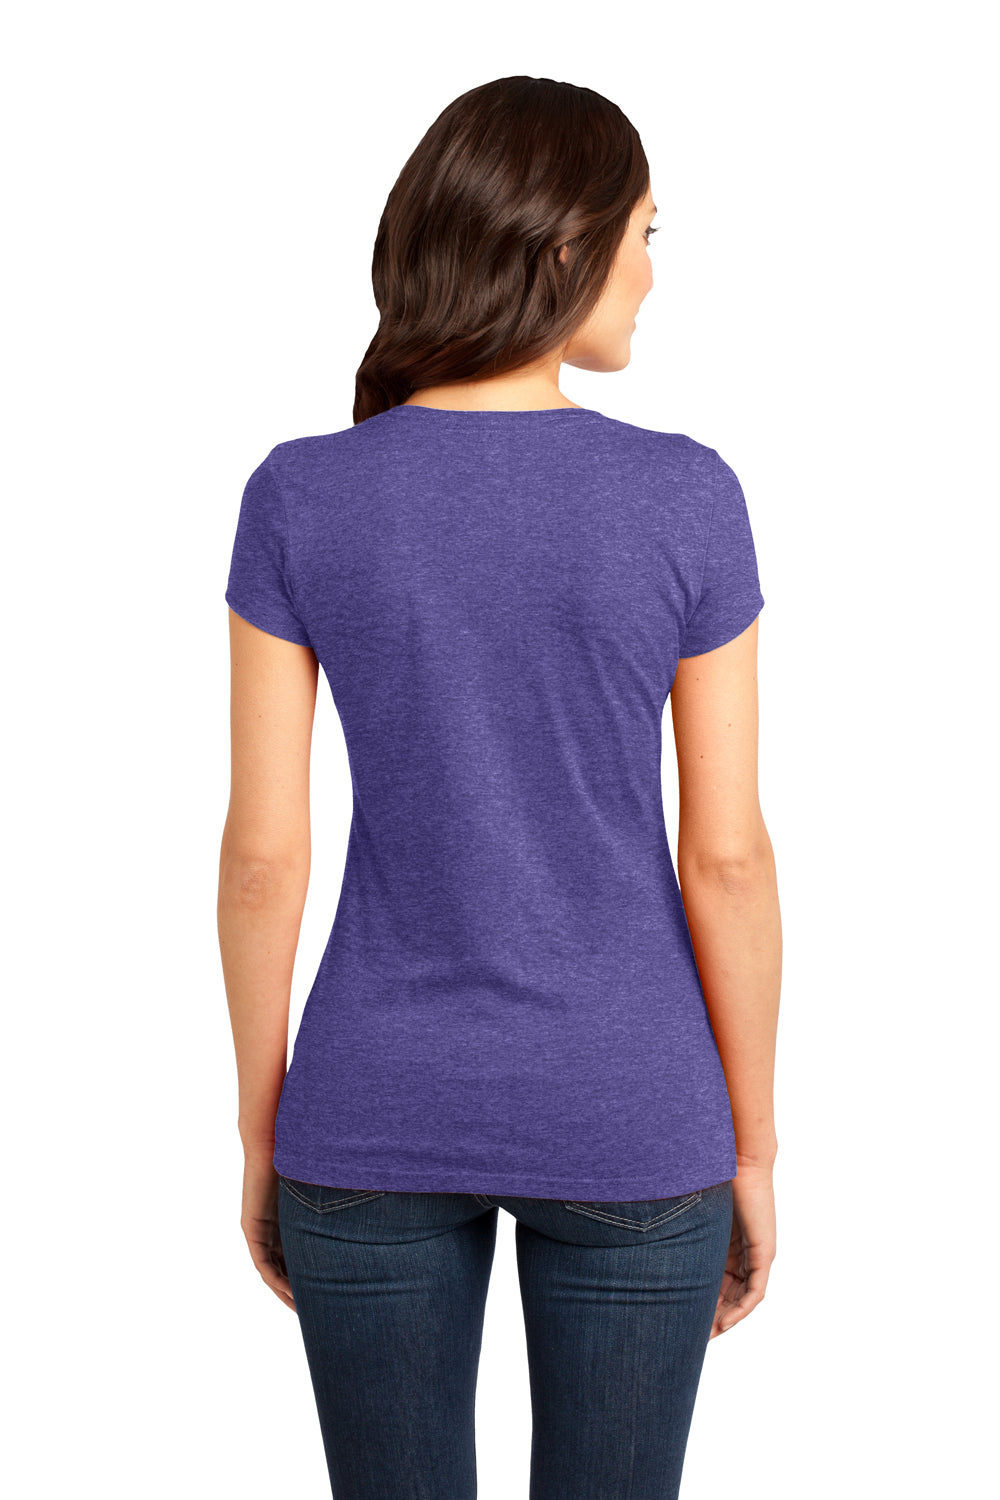 District DT6001 Womens Very Important Short Sleeve Crewneck T-Shirt Heather Purple Back